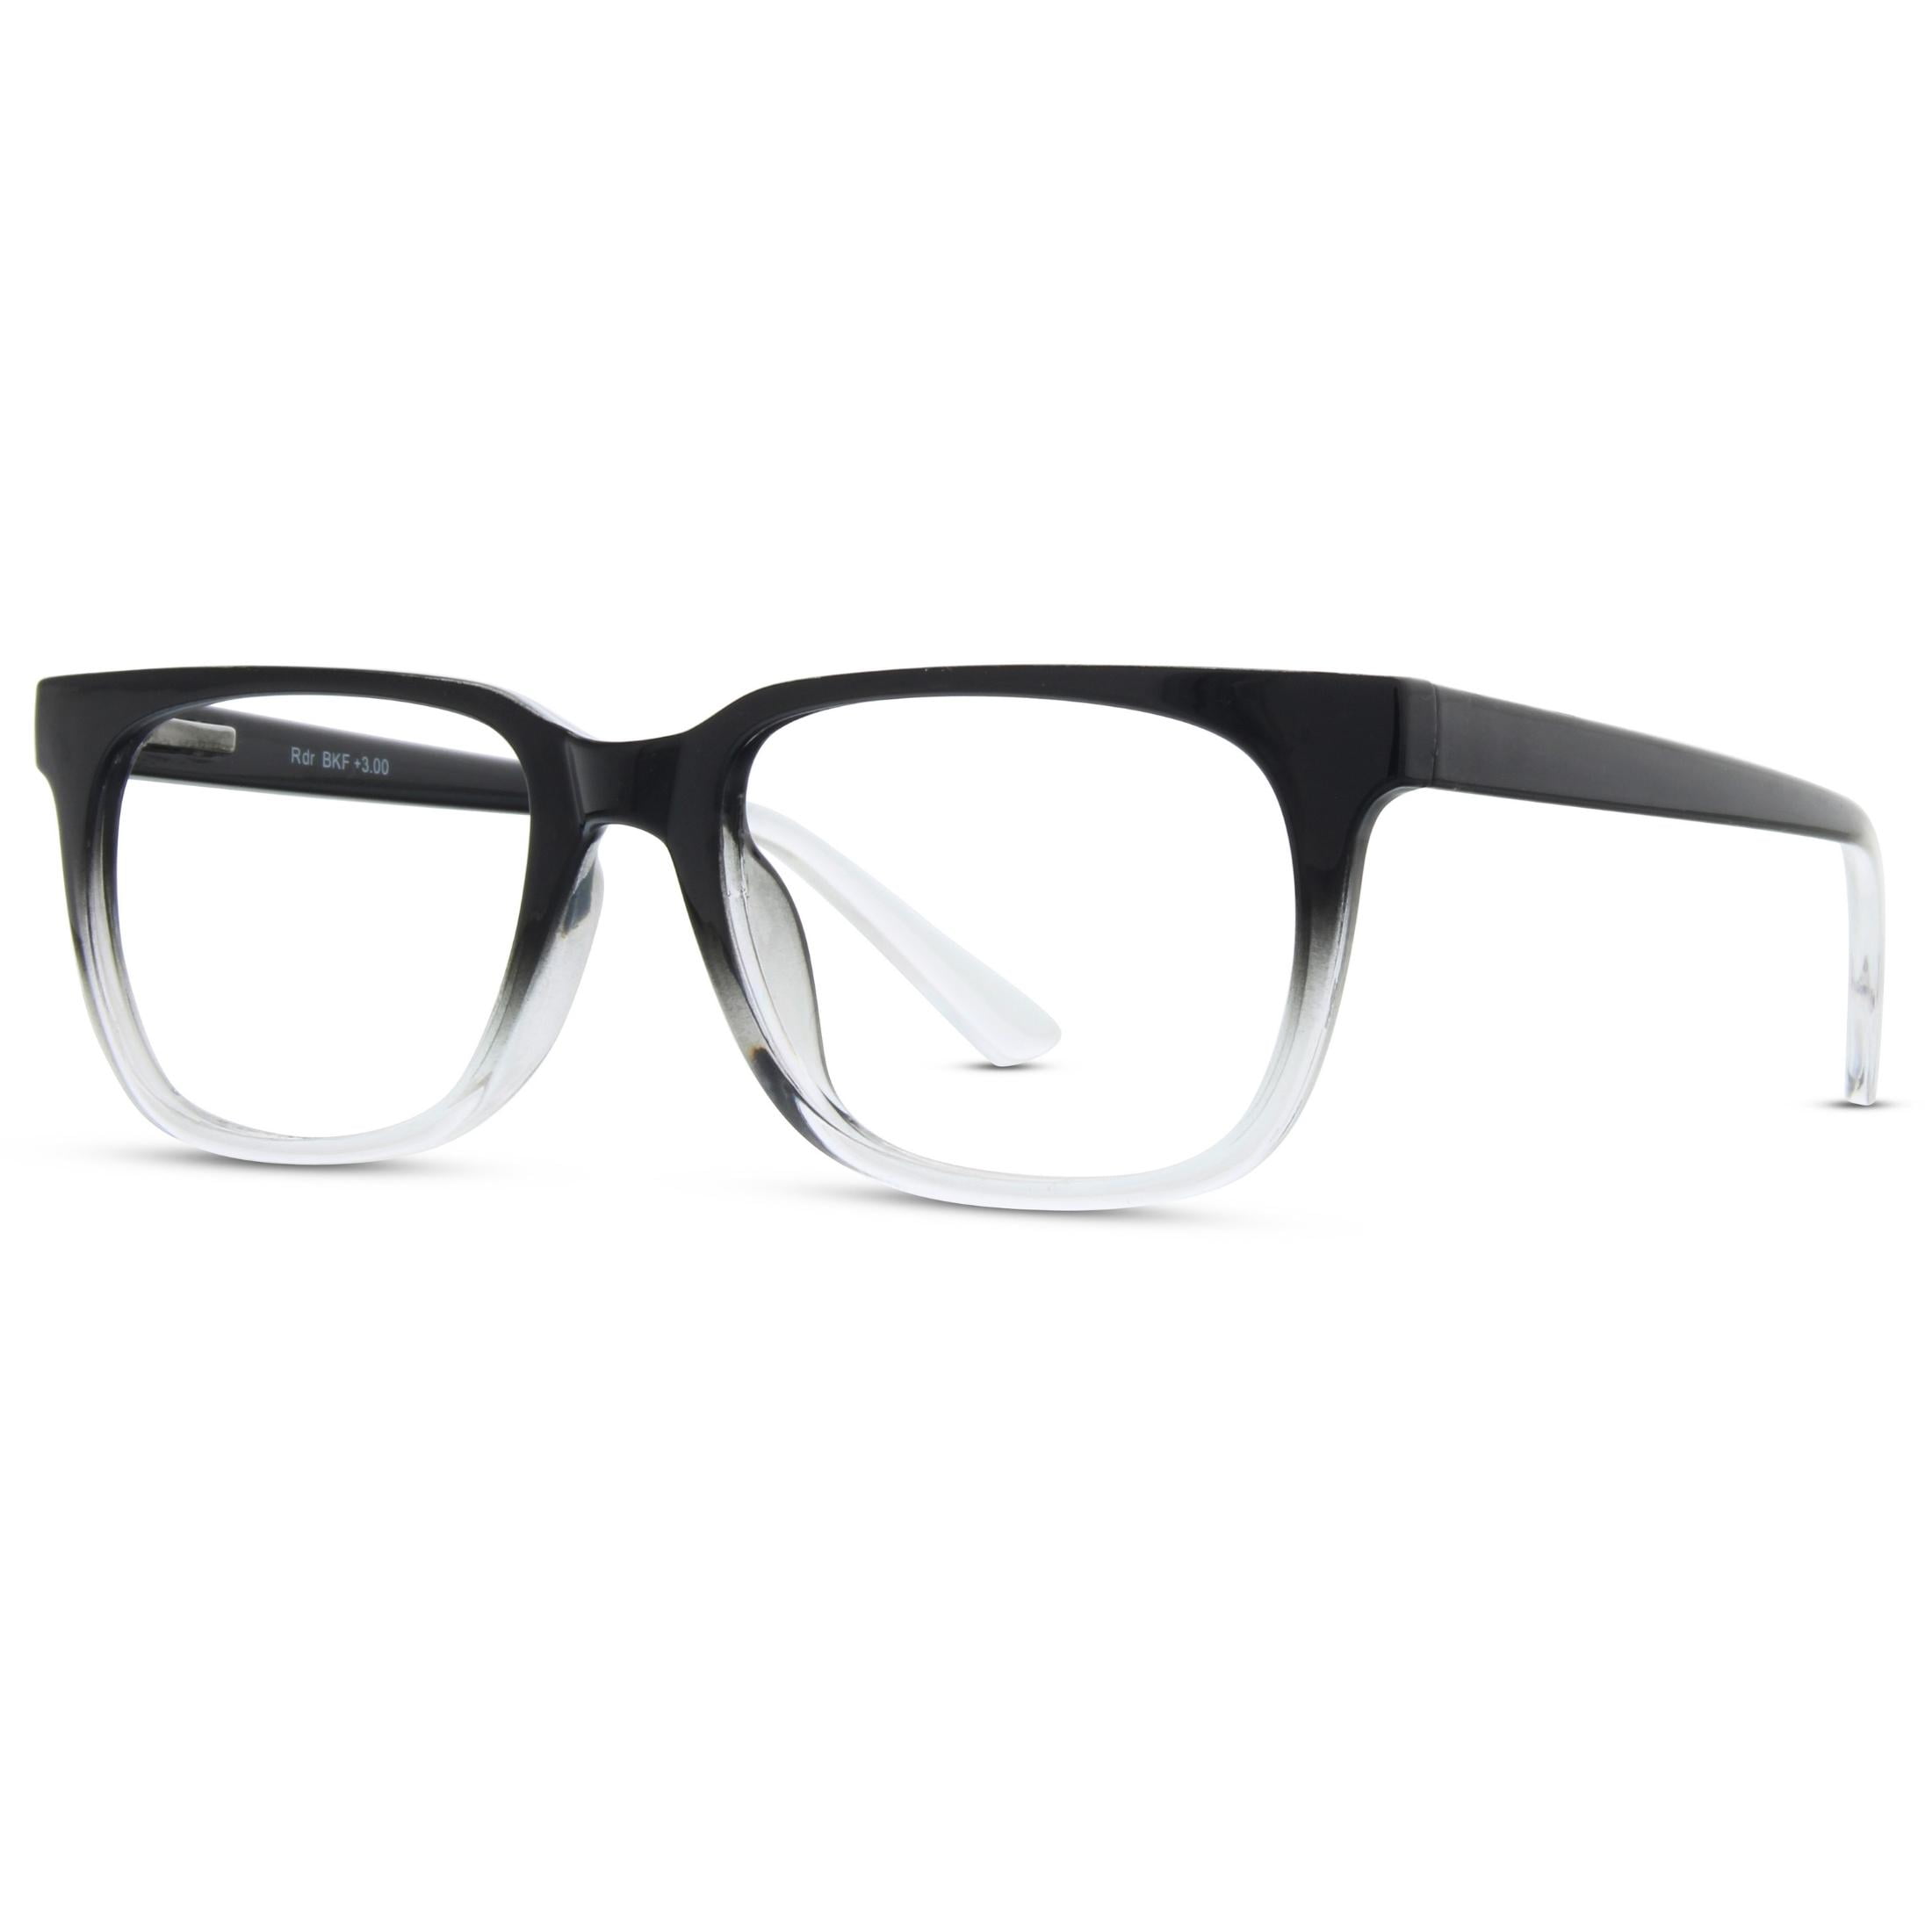 Jonas Paul Eyewear Blue Light Glasses, Black / Crystal Fade, Magnifying Acrylic Lens, Unisex, 3.00